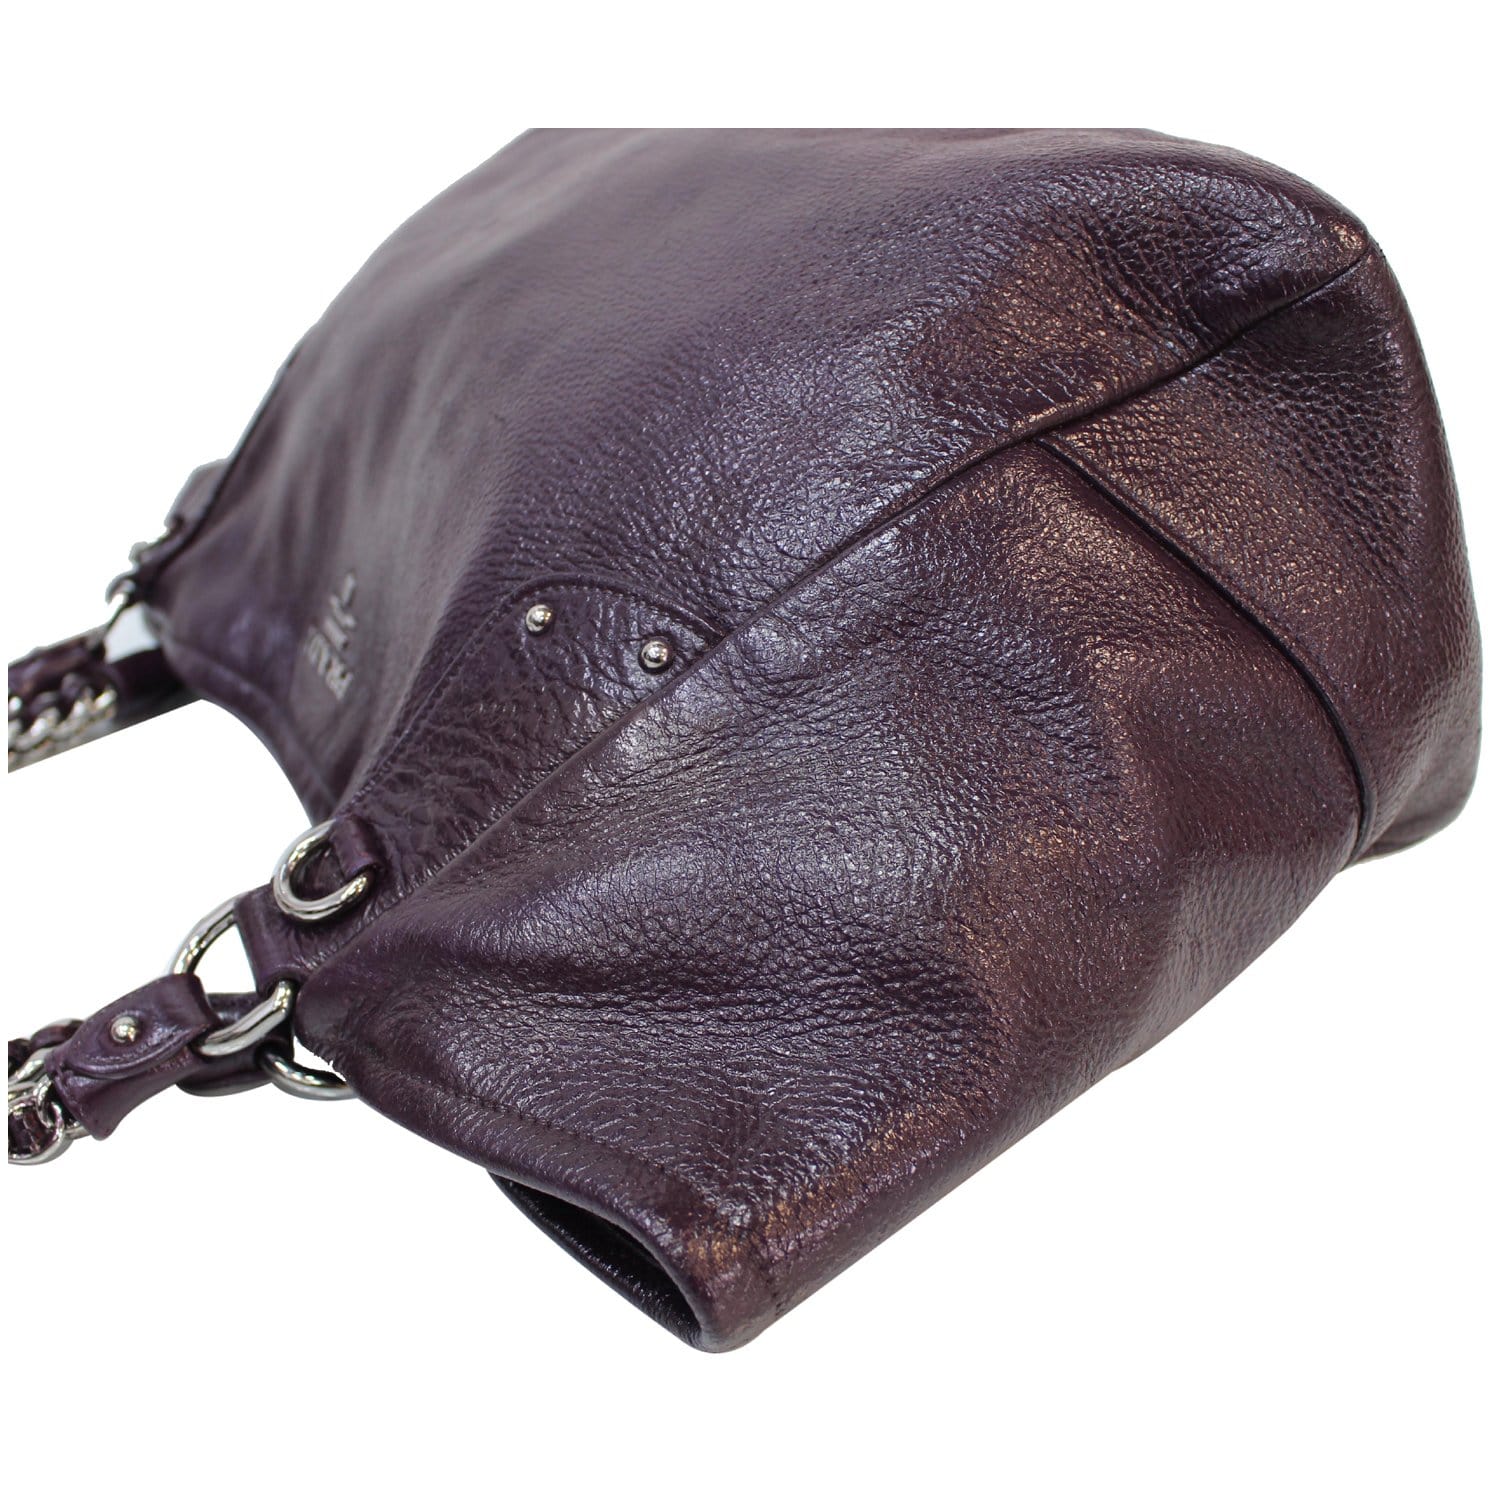 Prada Cervo Lux Chain Tote - Brown Totes, Handbags - PRA577083